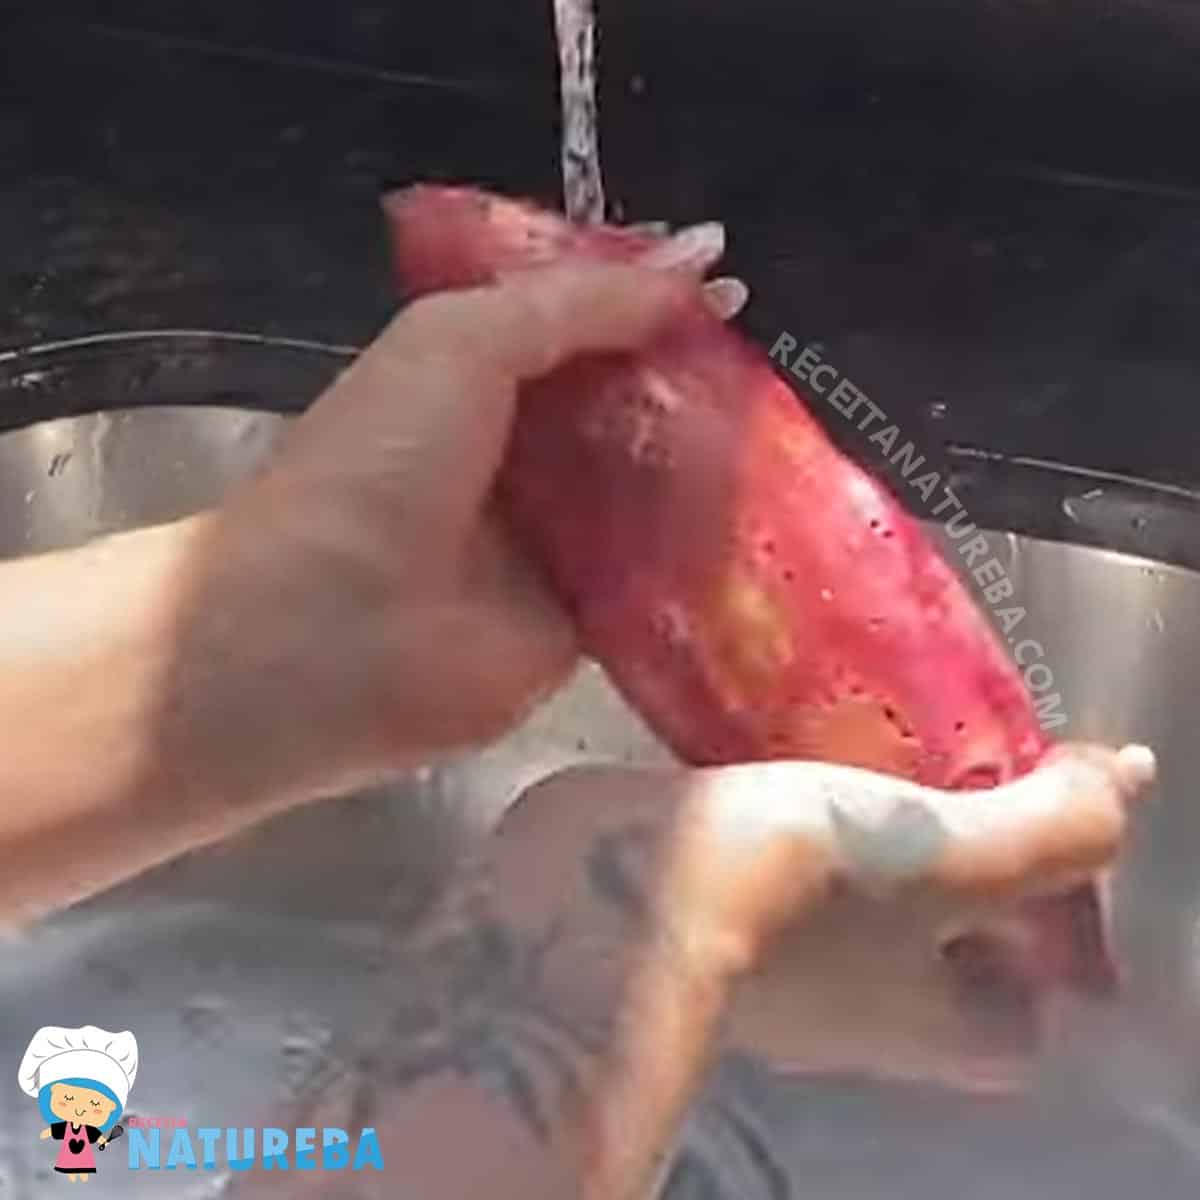 lavando a batata doce